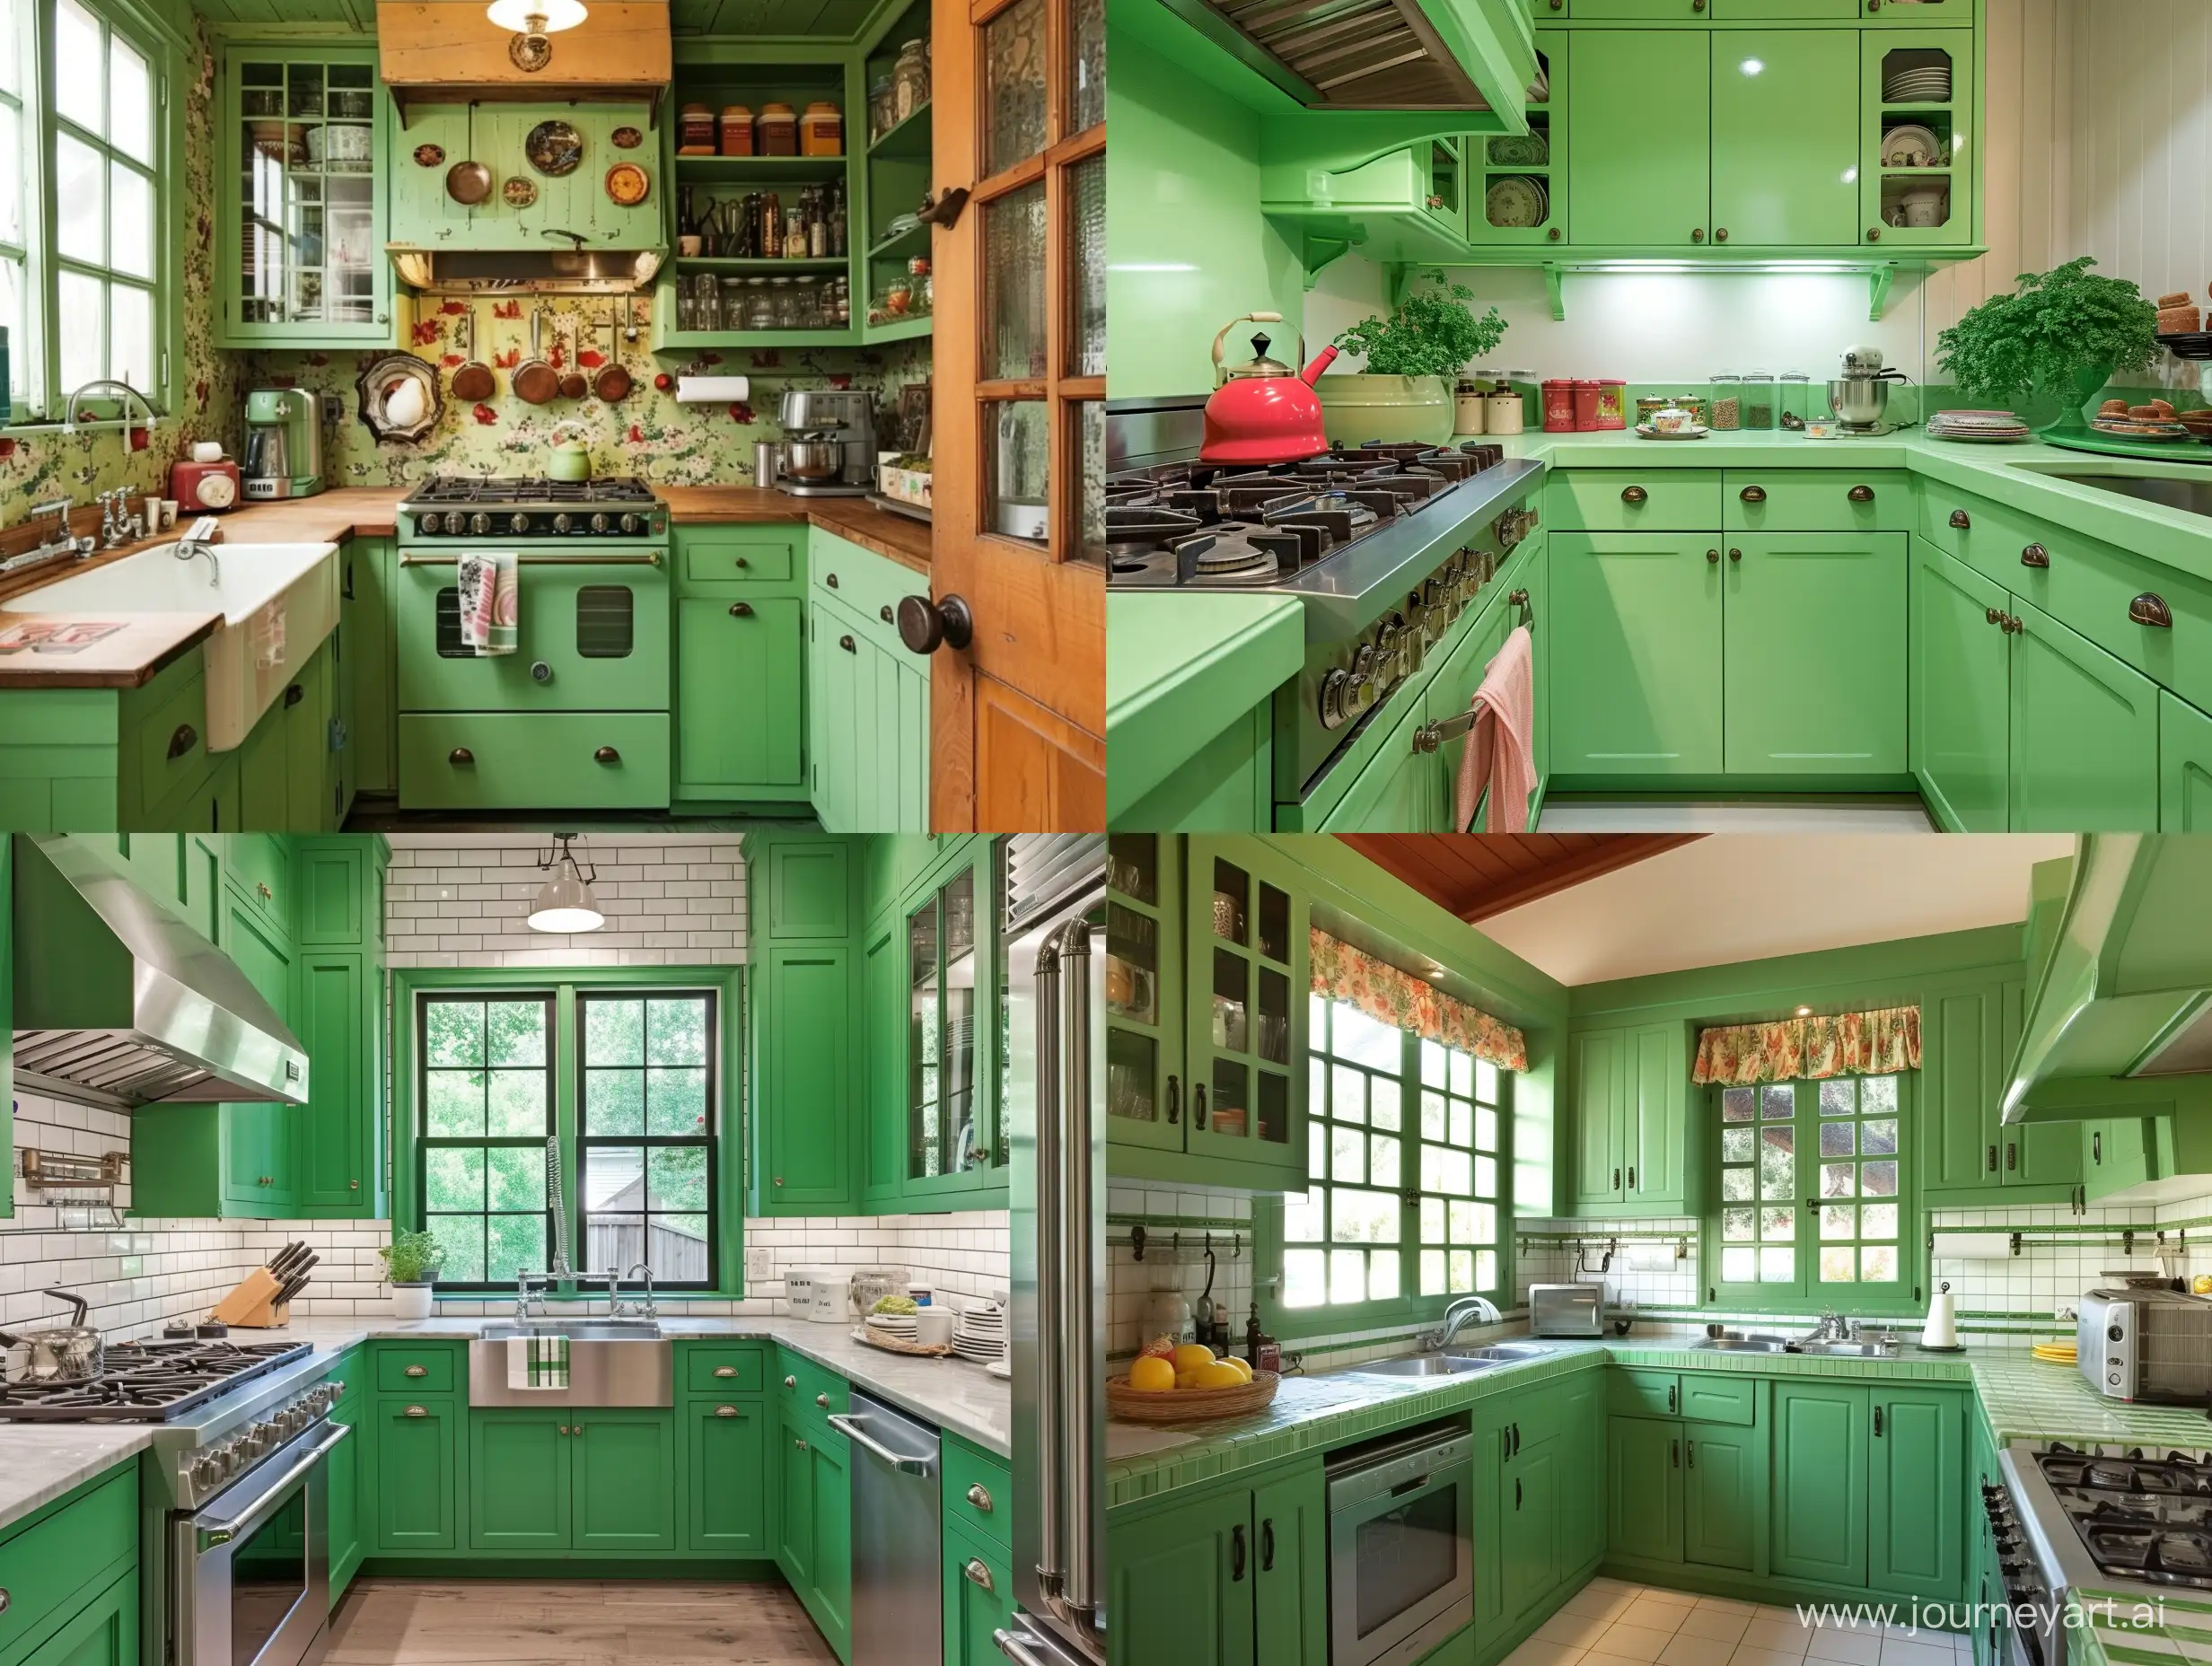 Charming-Vintage-Green-Kitchen-Interior-with-a-Nostalgic-Vibe